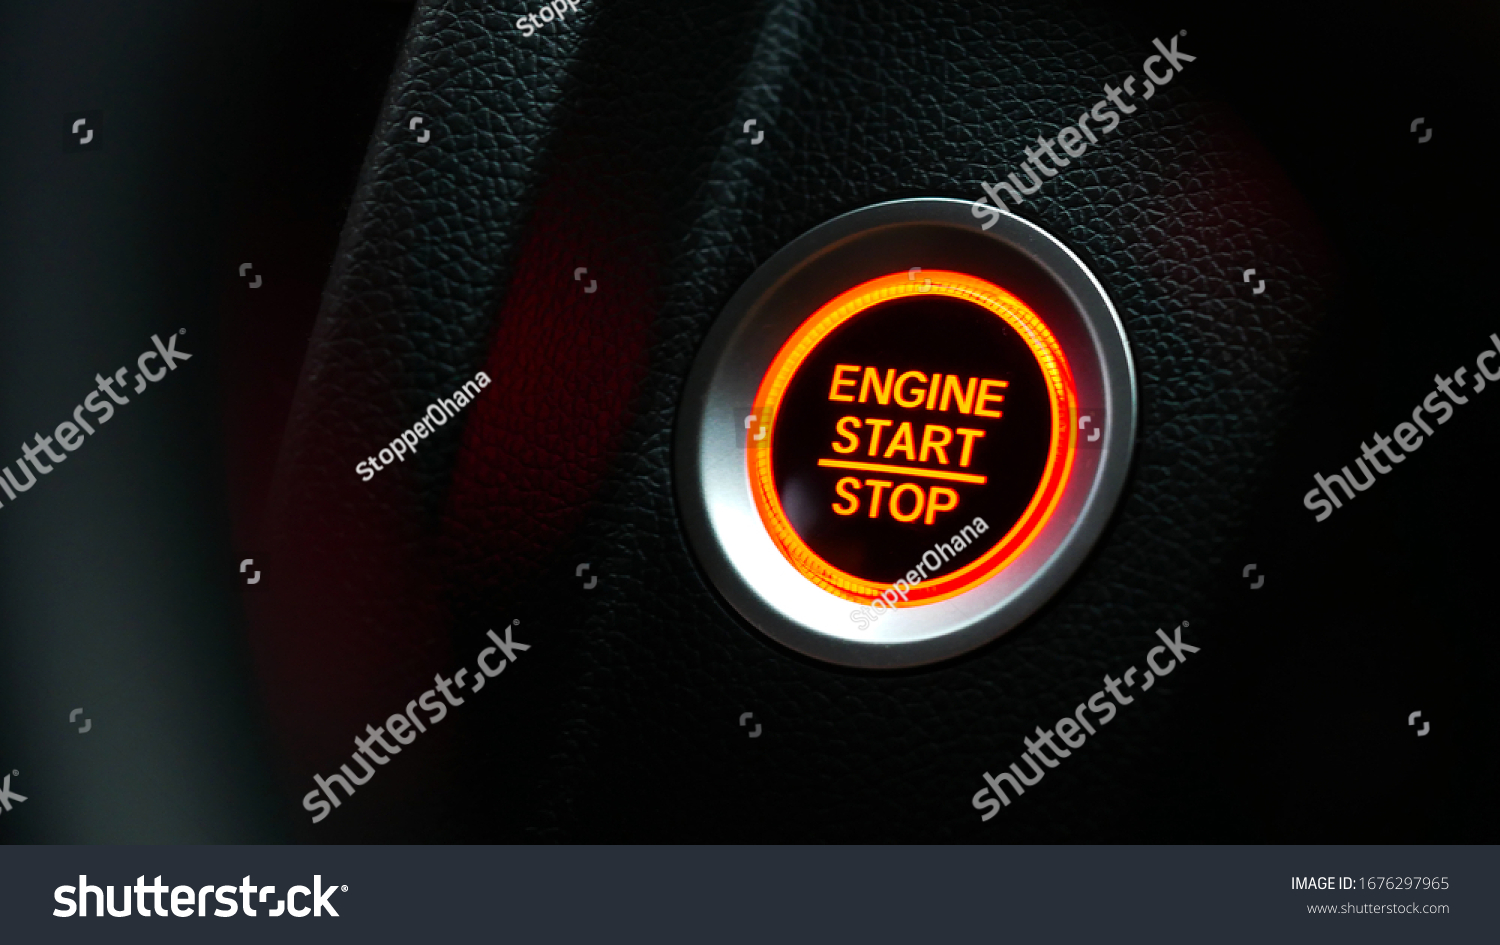 Car dashboard with focus on red engine start stop button, car interior details. button engine start and engine stop, Car engine push start stop button ignition remote starter. #1676297965